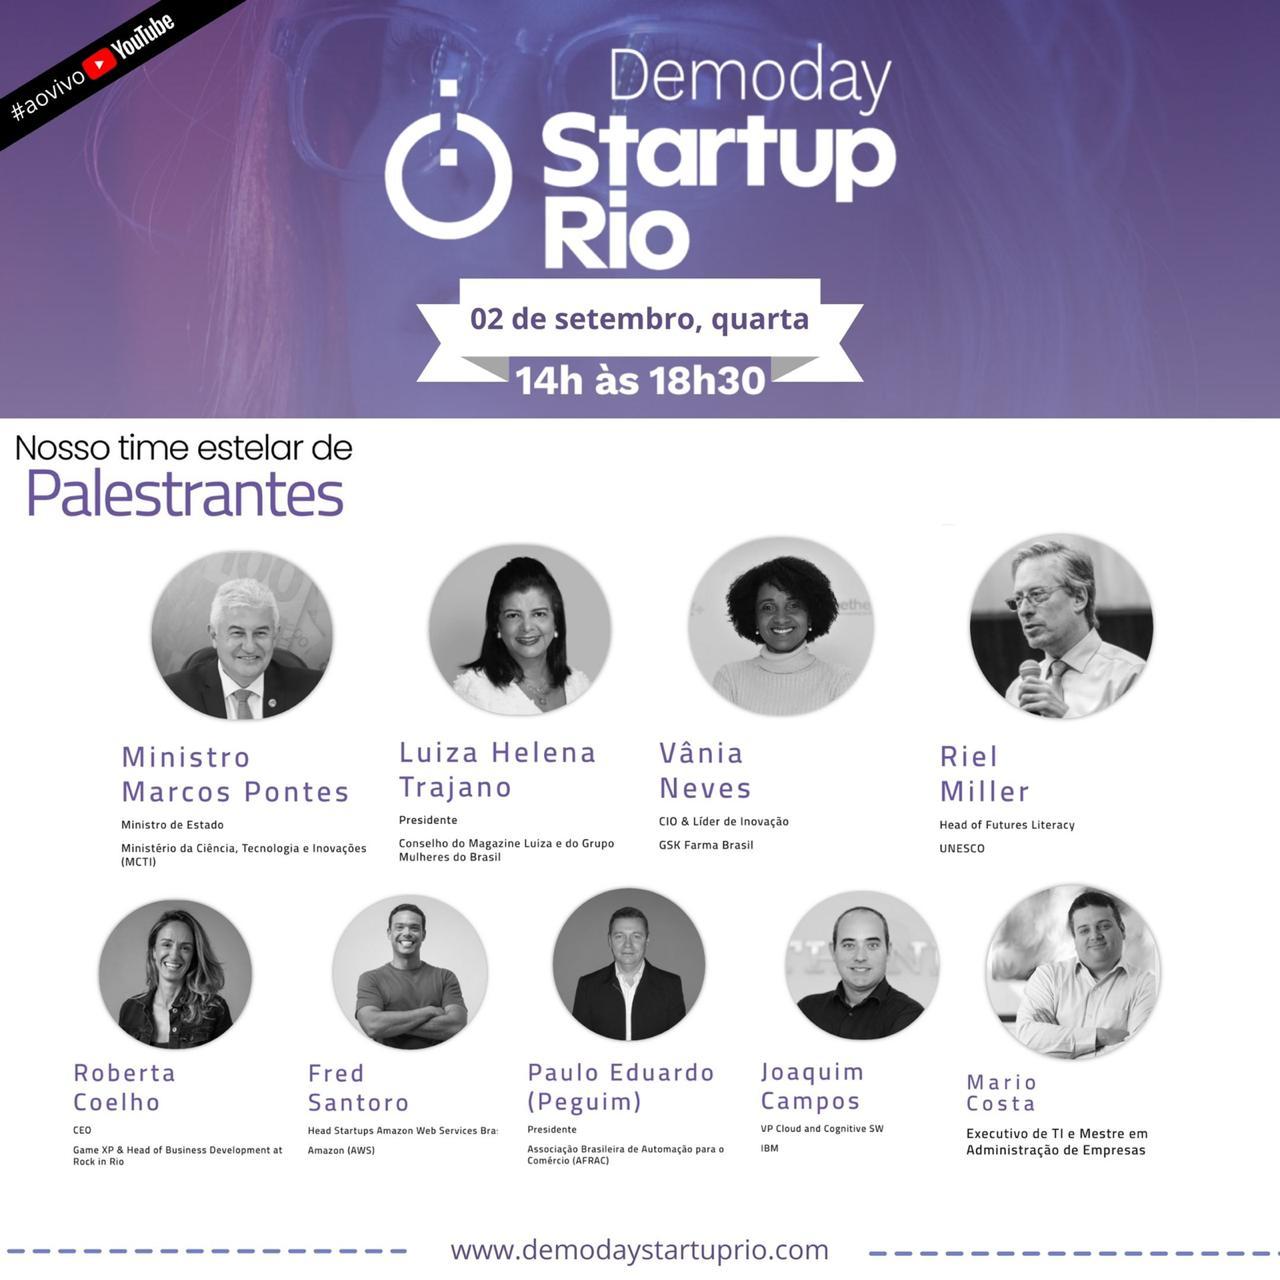 Startup Rio realiza seu maior Demoday